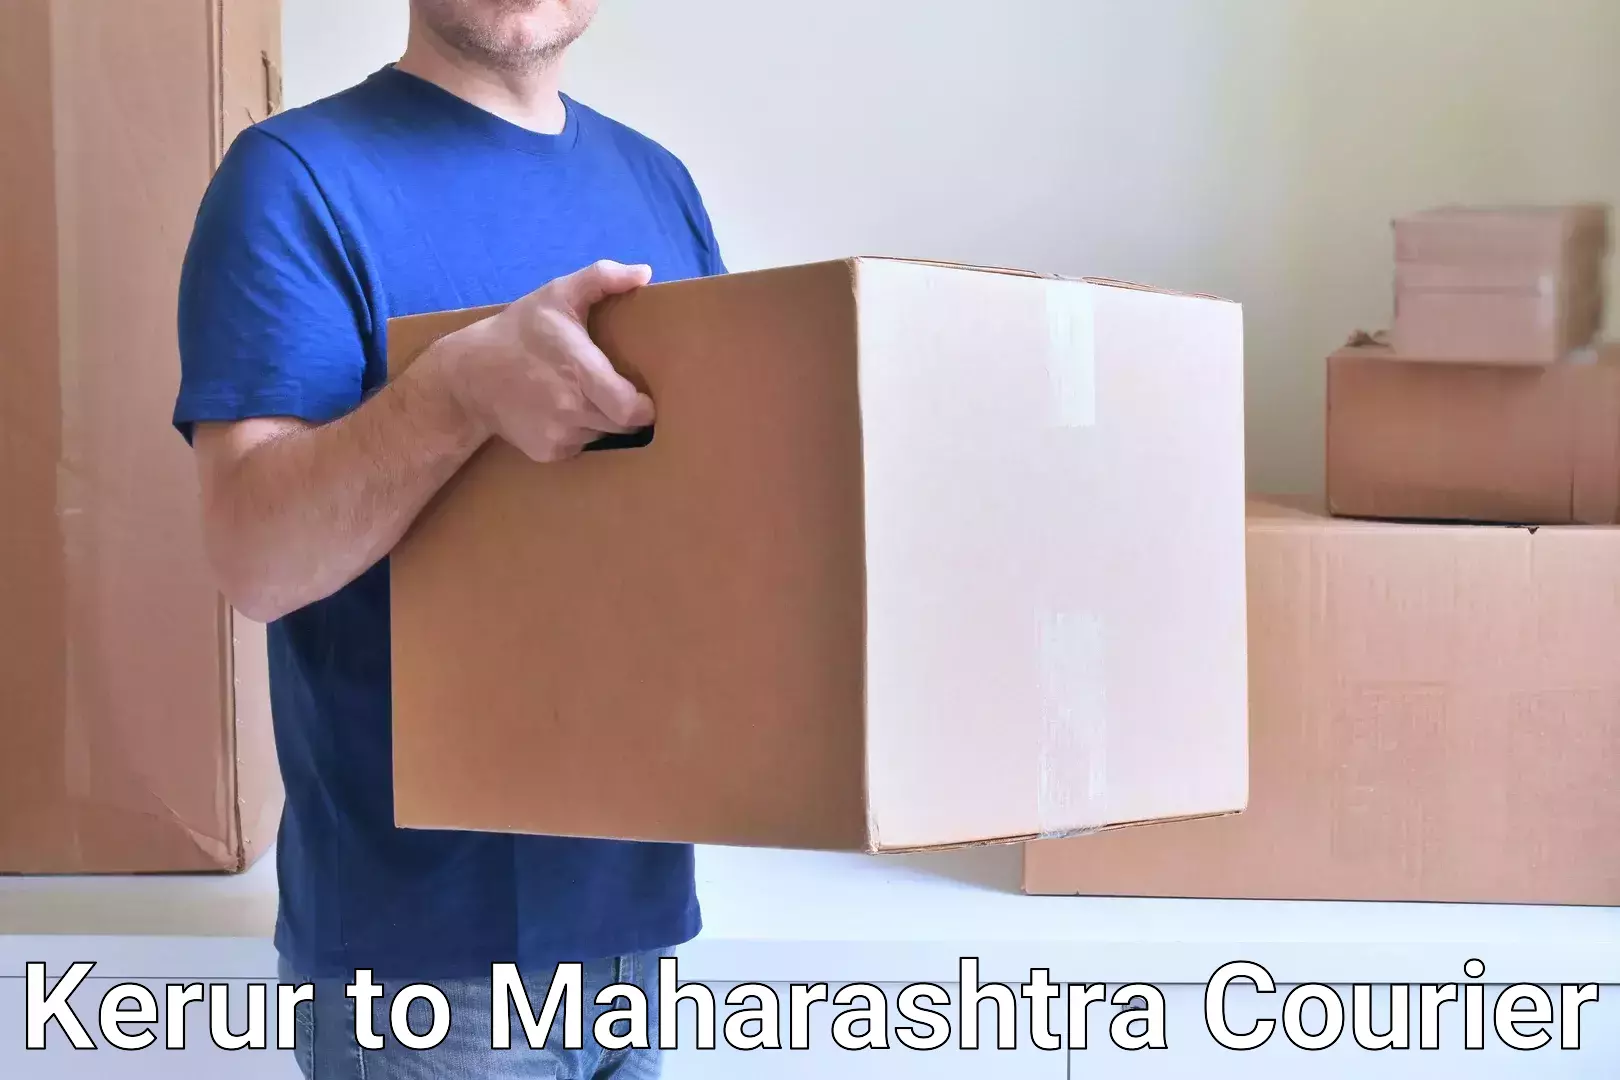 Bulk courier orders in Kerur to Ambarnath